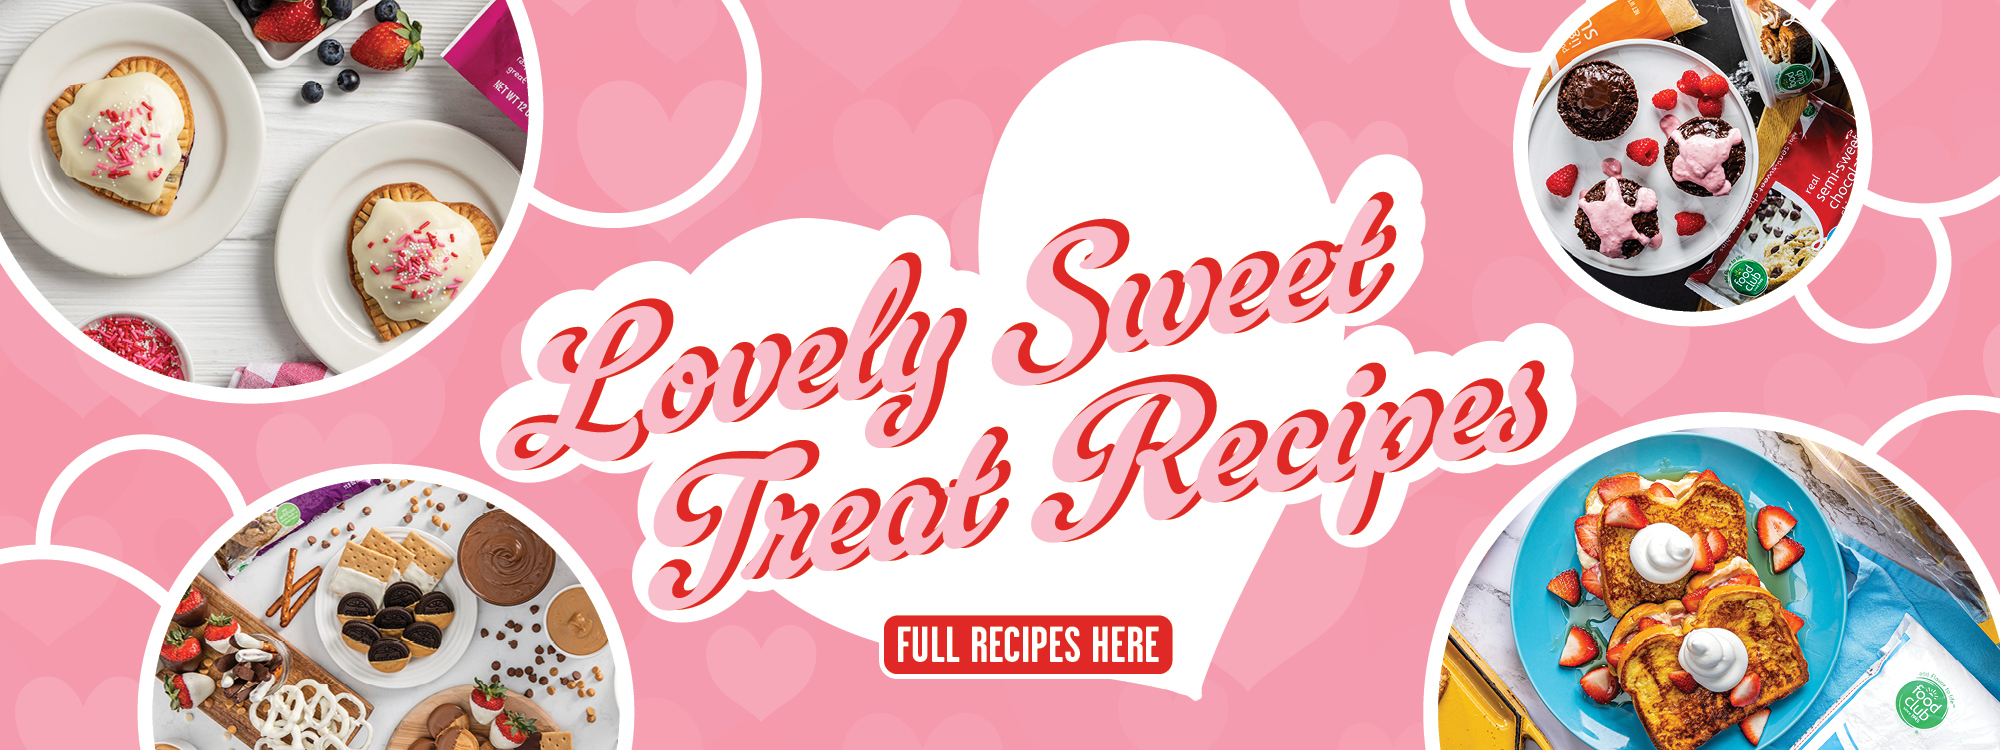 Valentine's Day Recipes